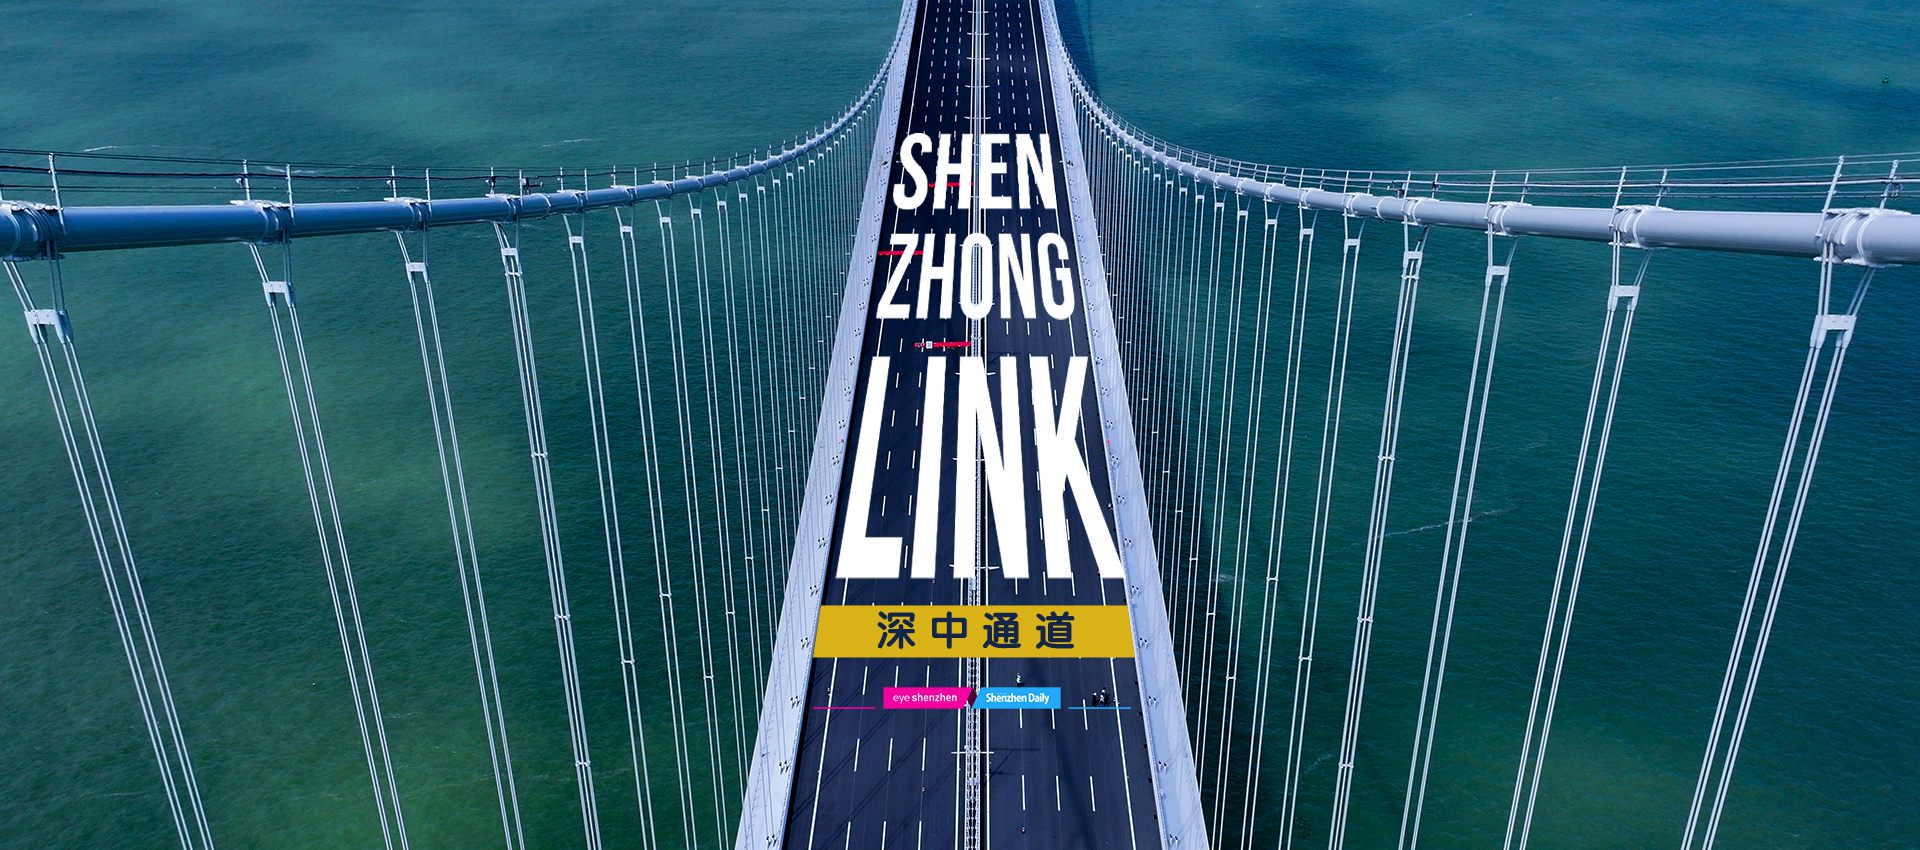 Shen-Zhong Link